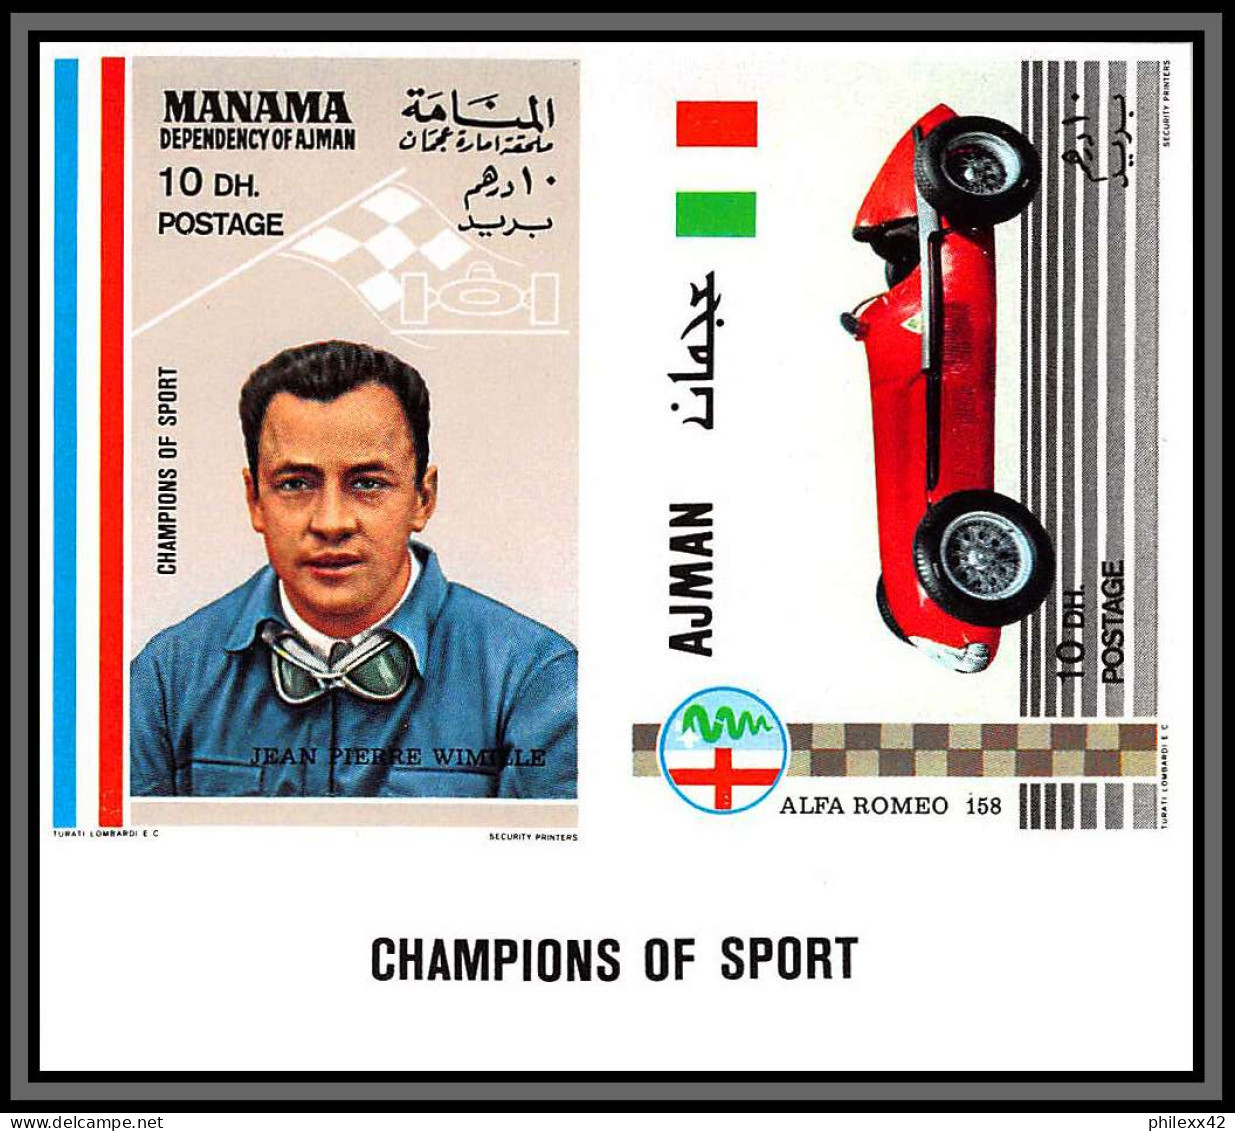 Manama - 5052a/ Mi 147/152 B Ajman A 375/380 B Cars Motor racing Voiture MNH Non dentelé imperf 1969 fangio ferrari